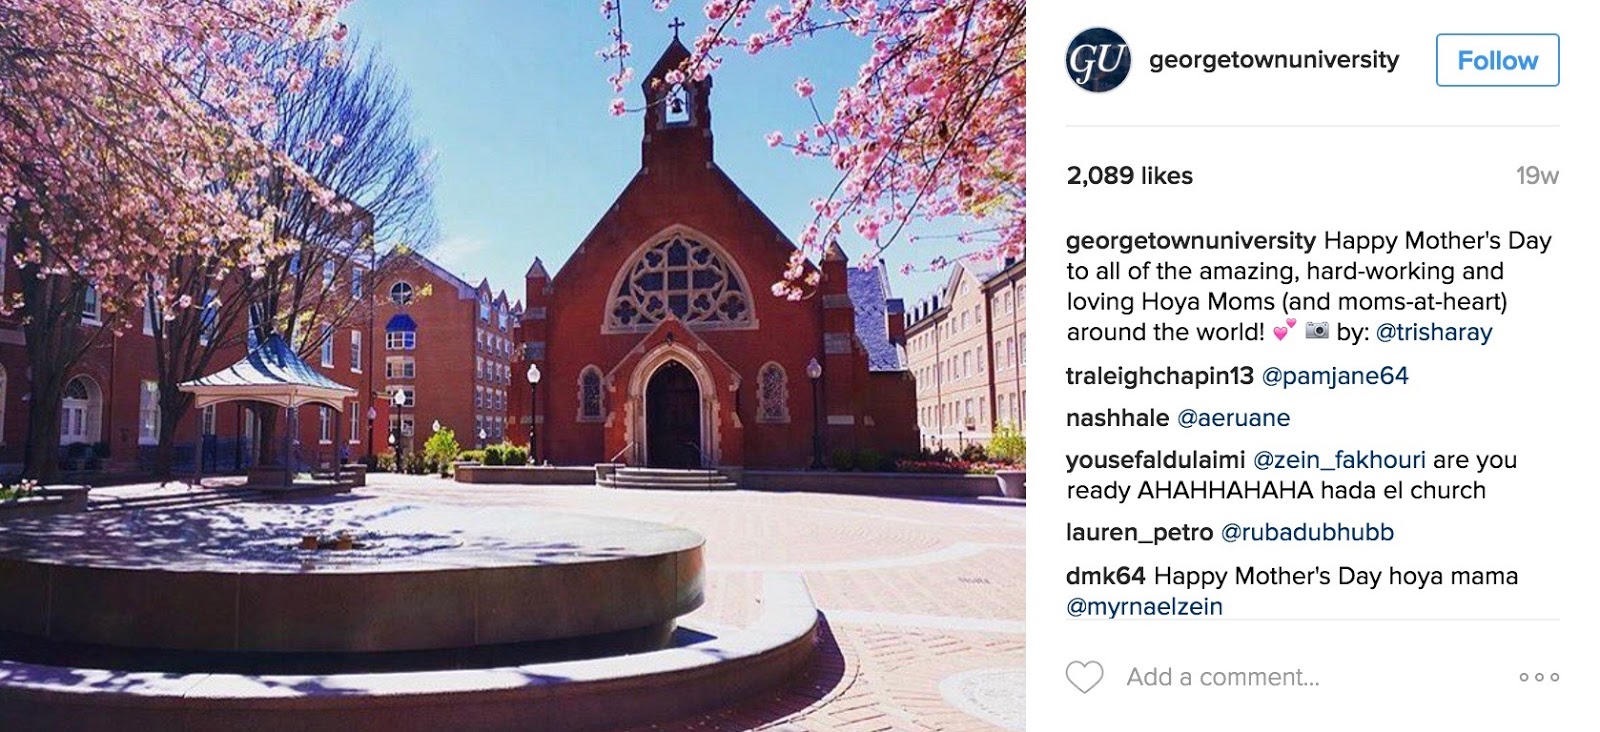 Georgetown University showcases it